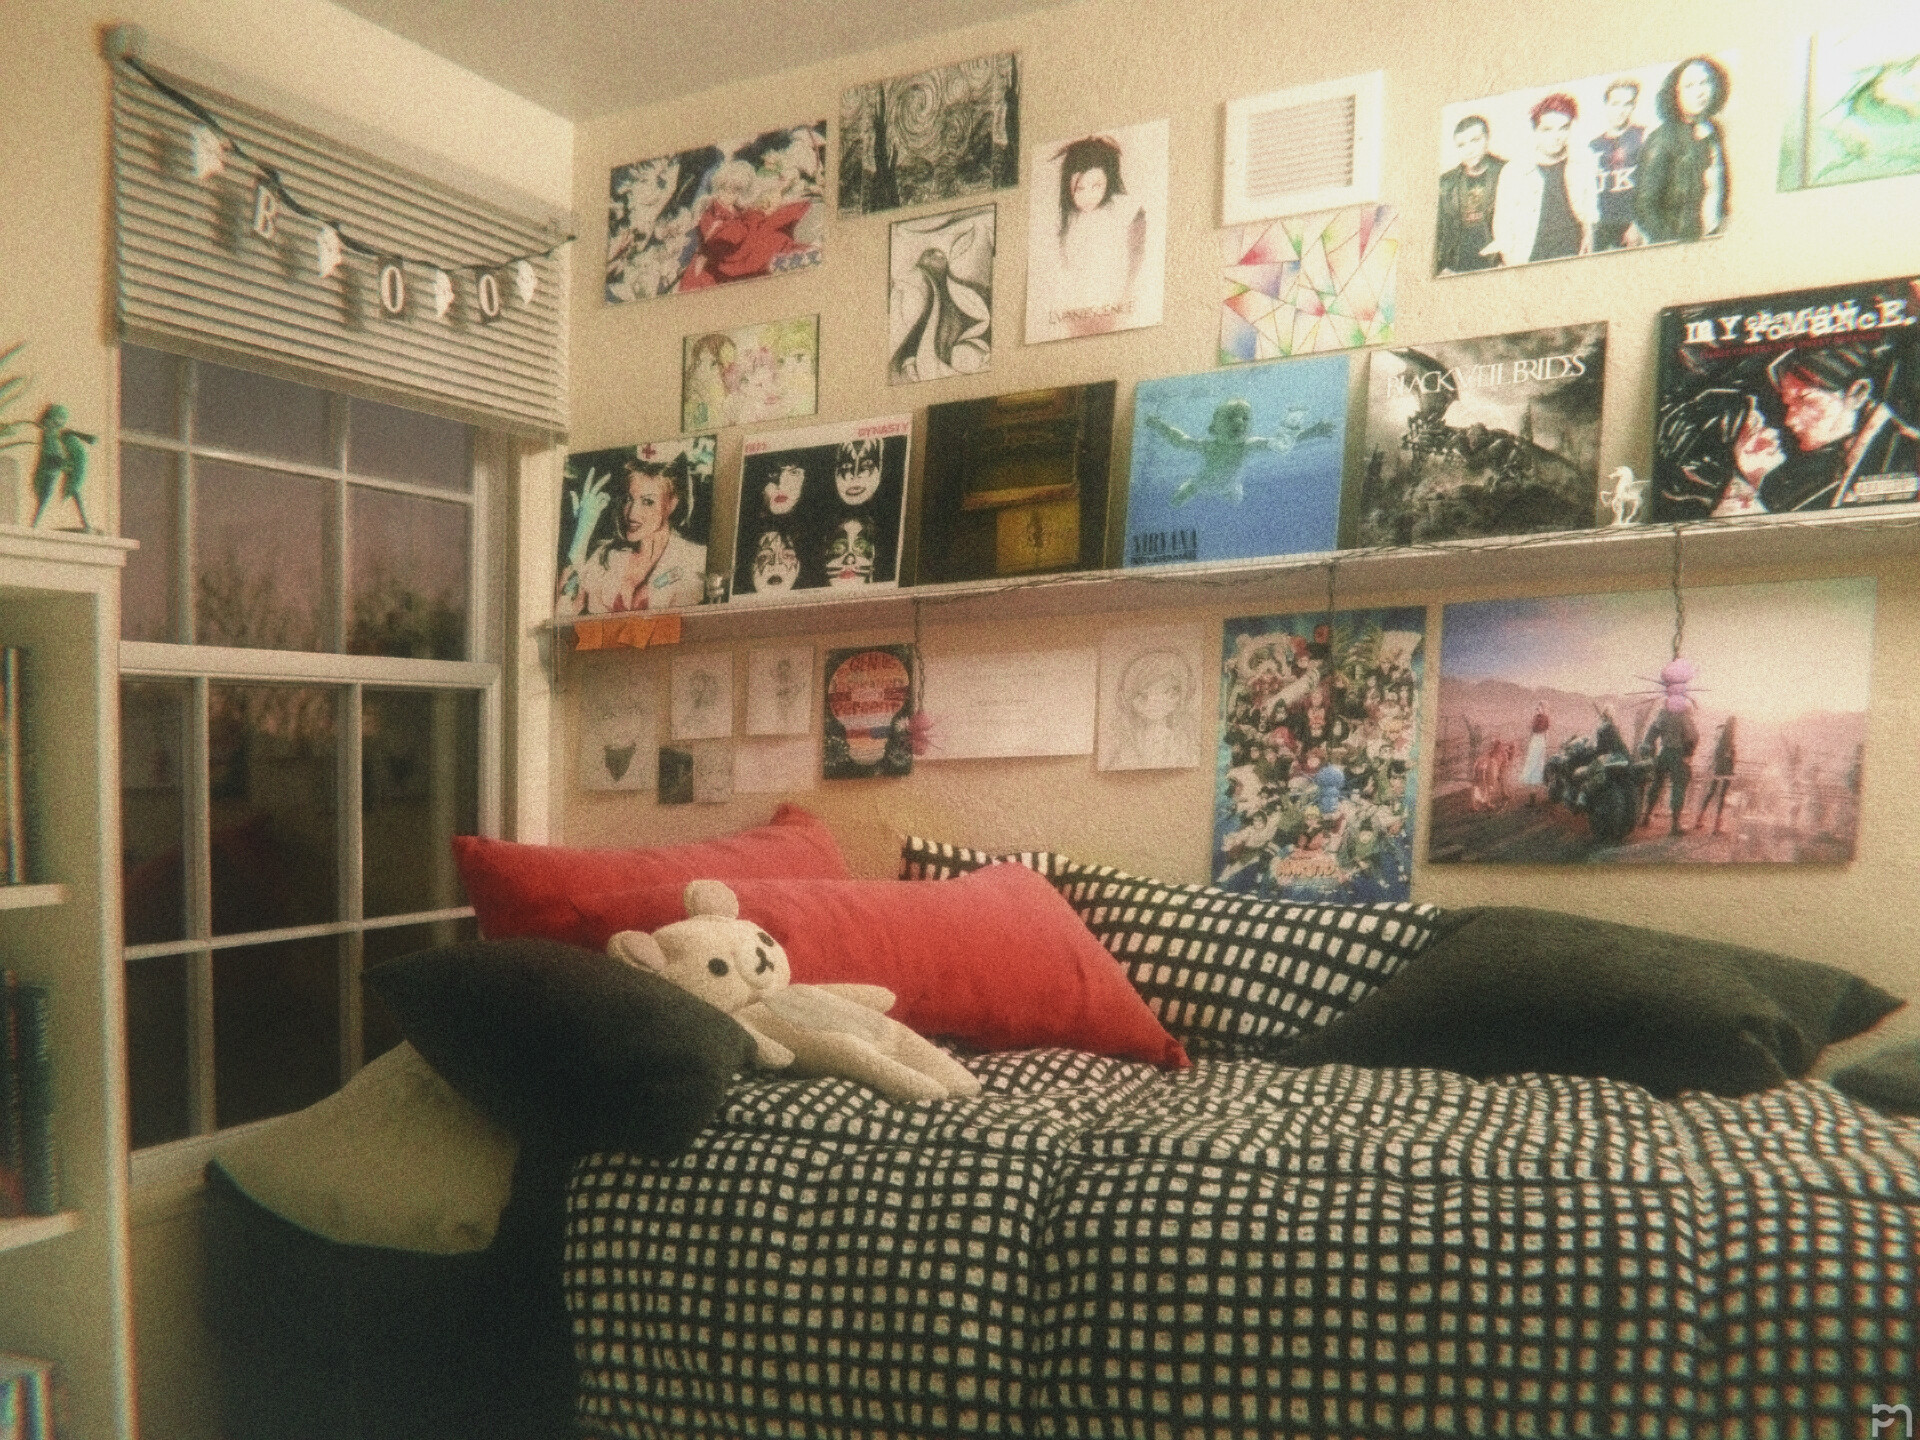 room decor Grunge posts - bedroom design idea